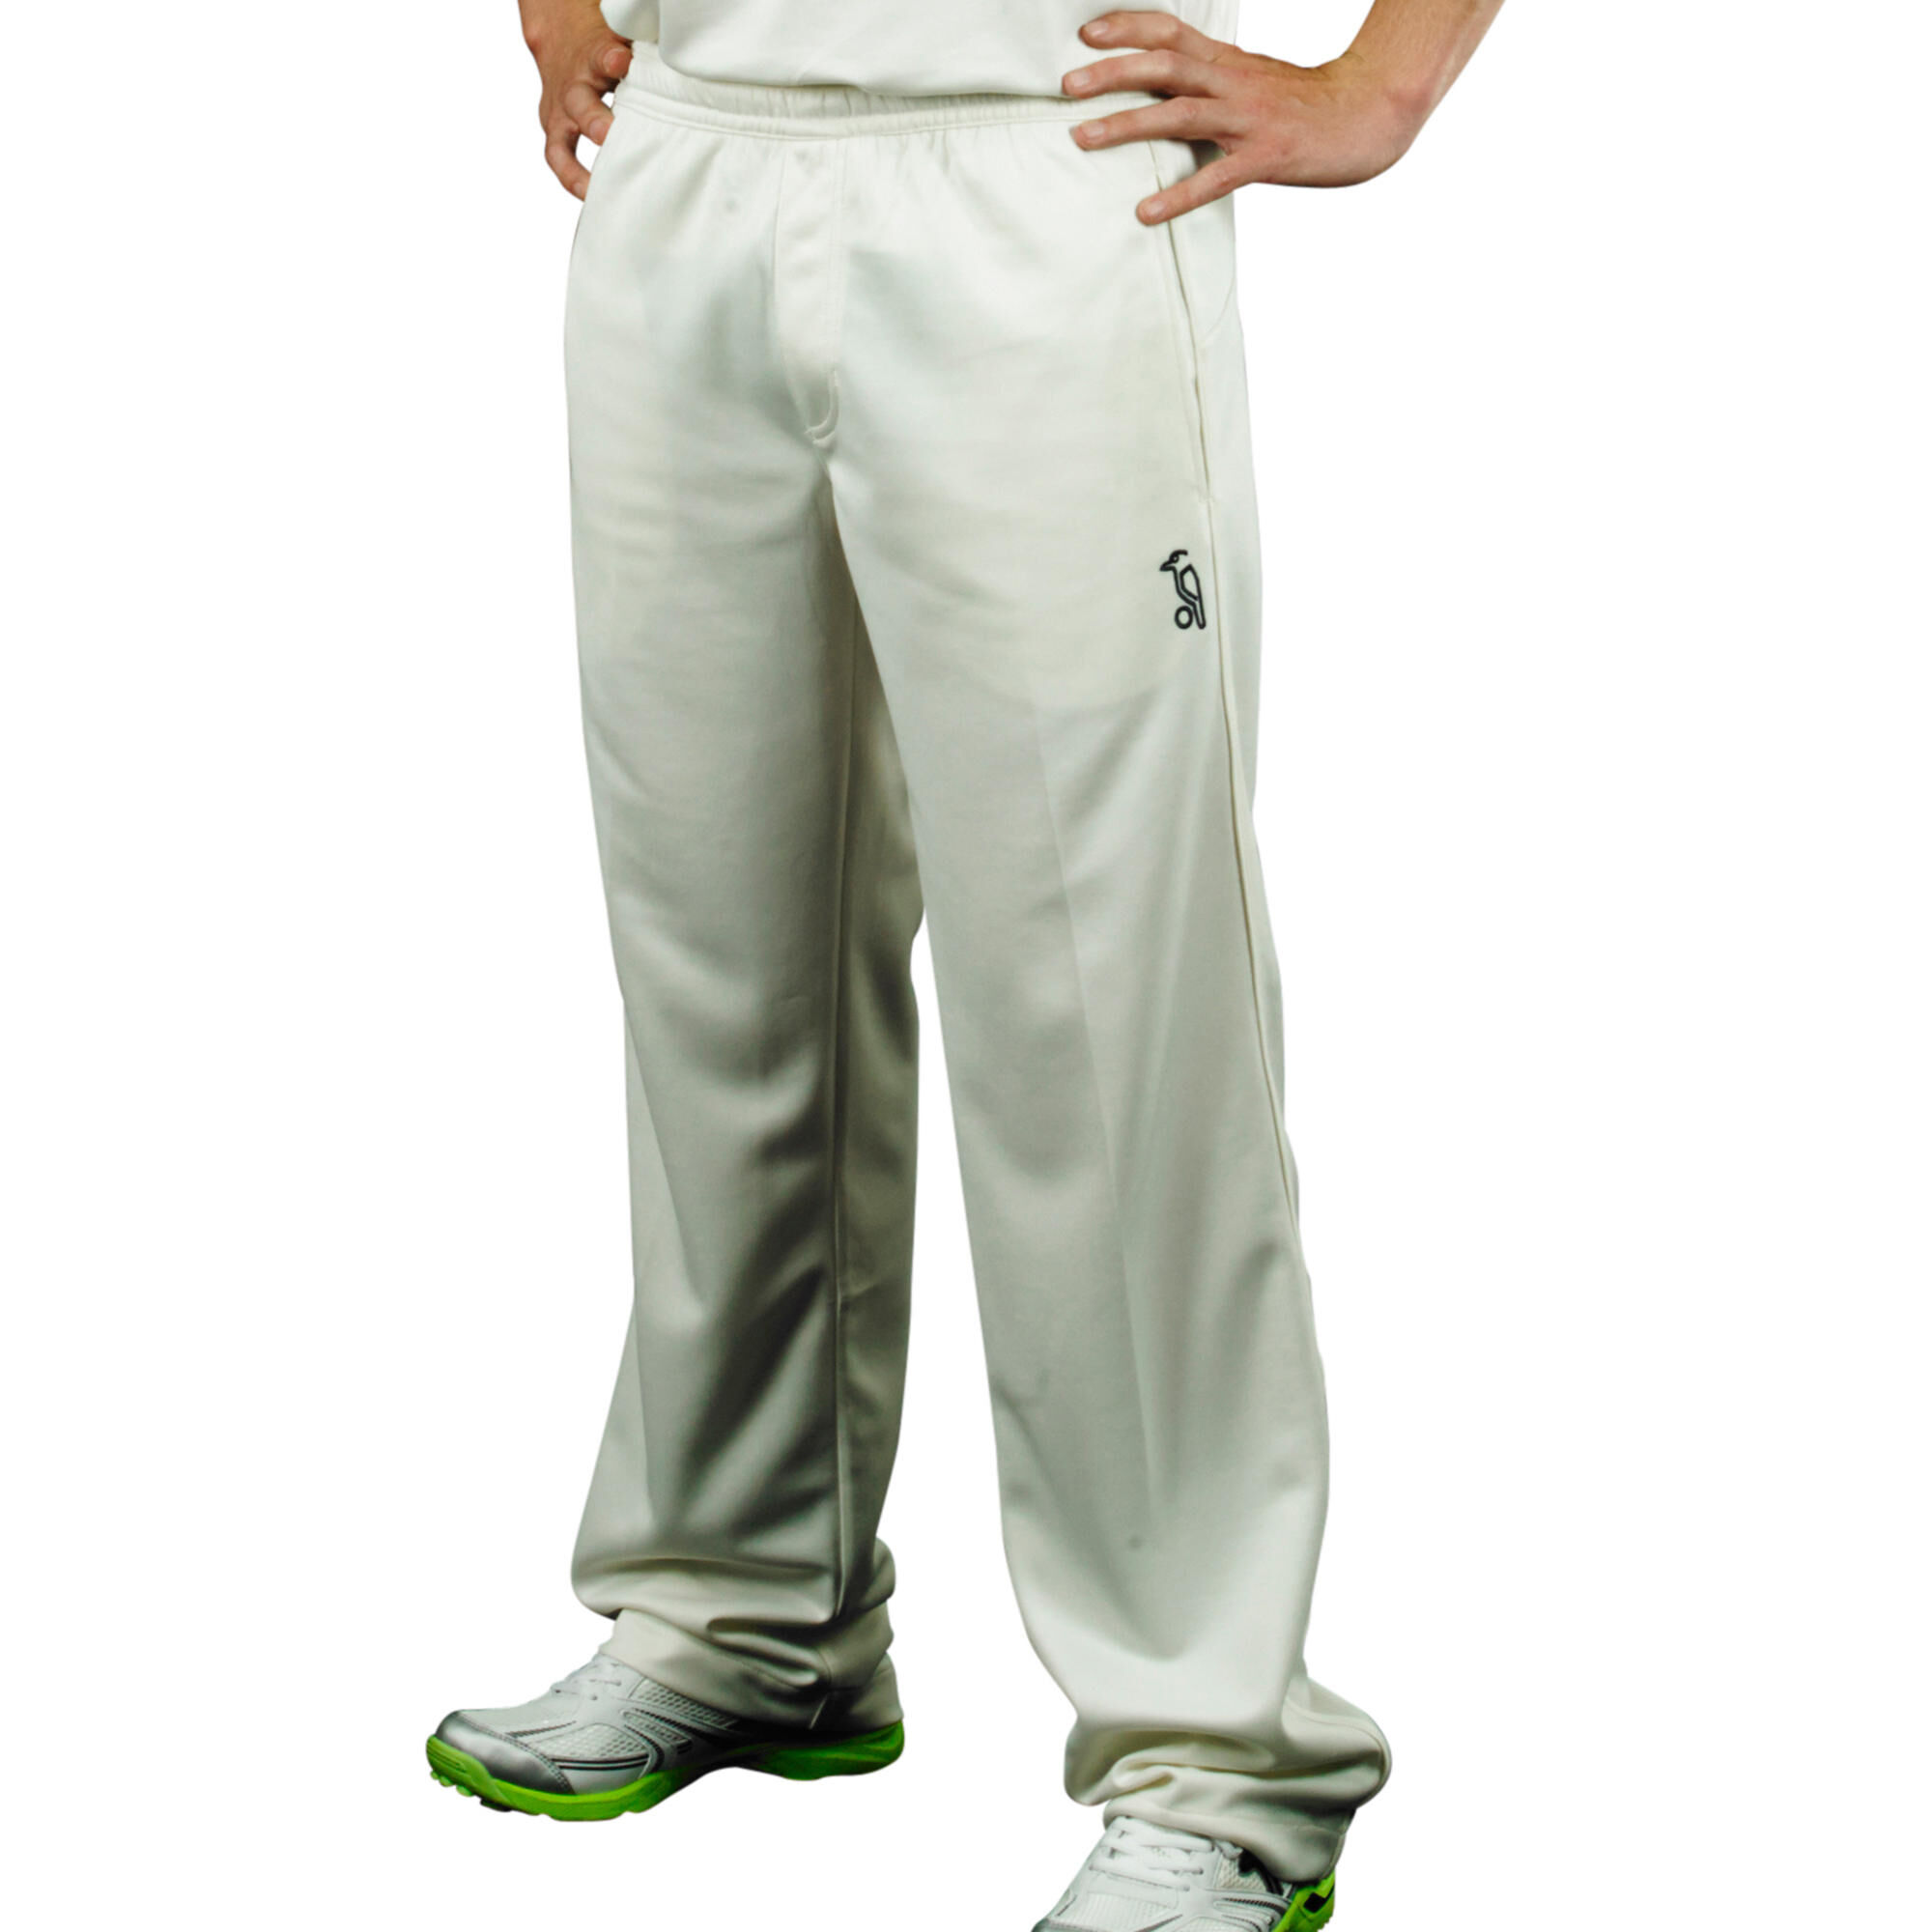 KOOKABURRA Pro Players cricket trousers